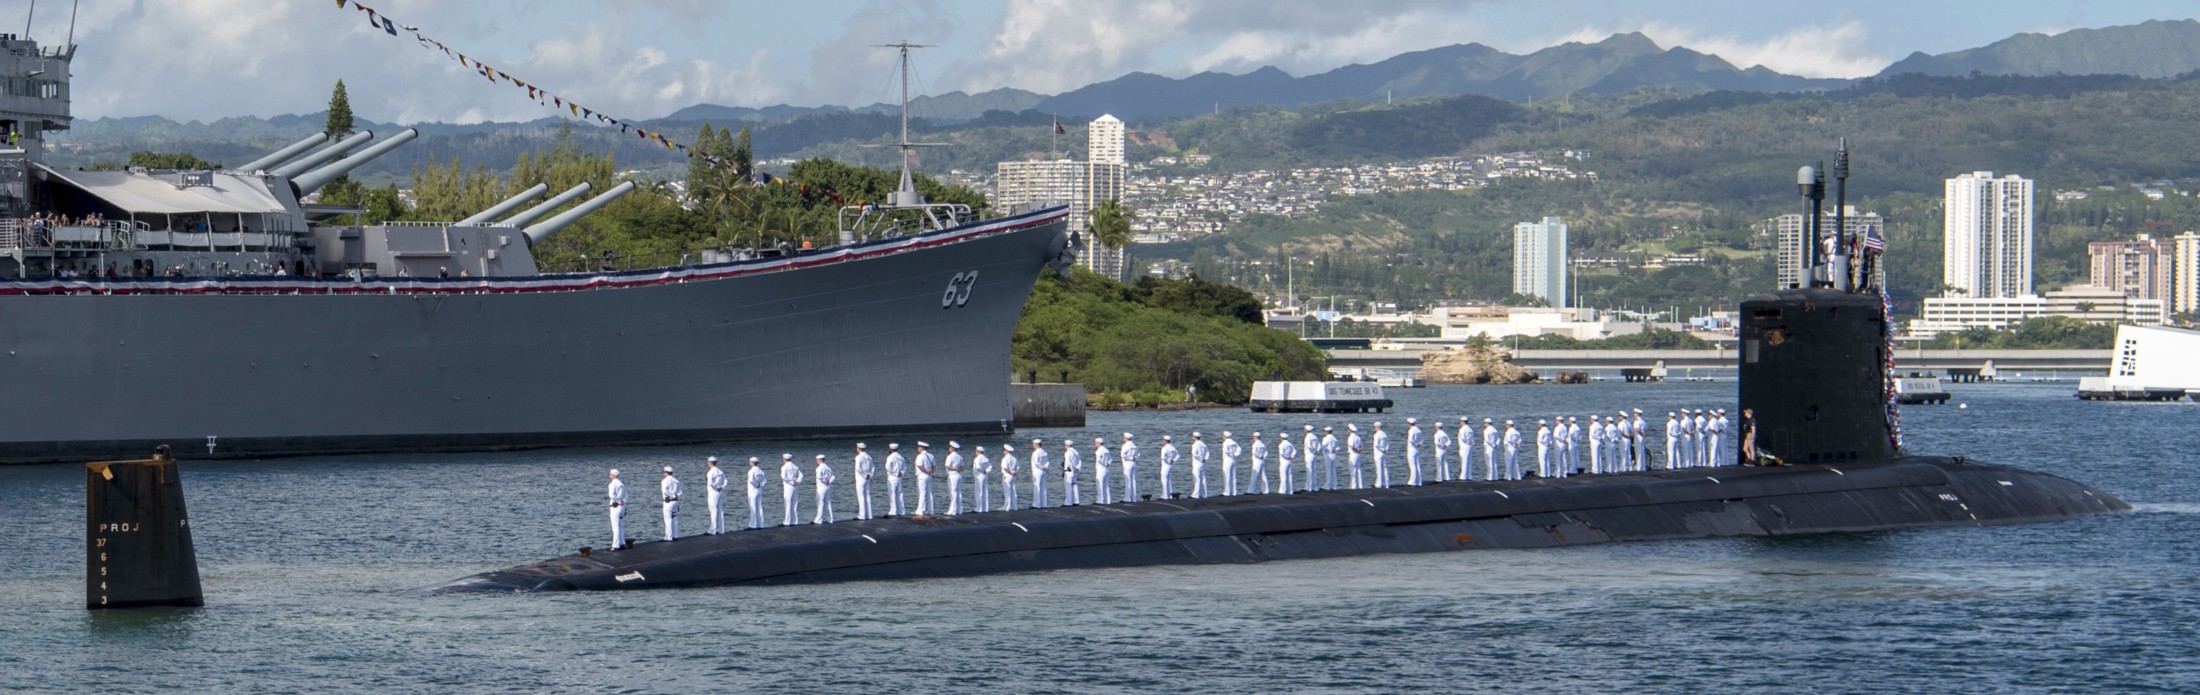 ssn-780 uss missouri virginia class attack submarine us navy 51